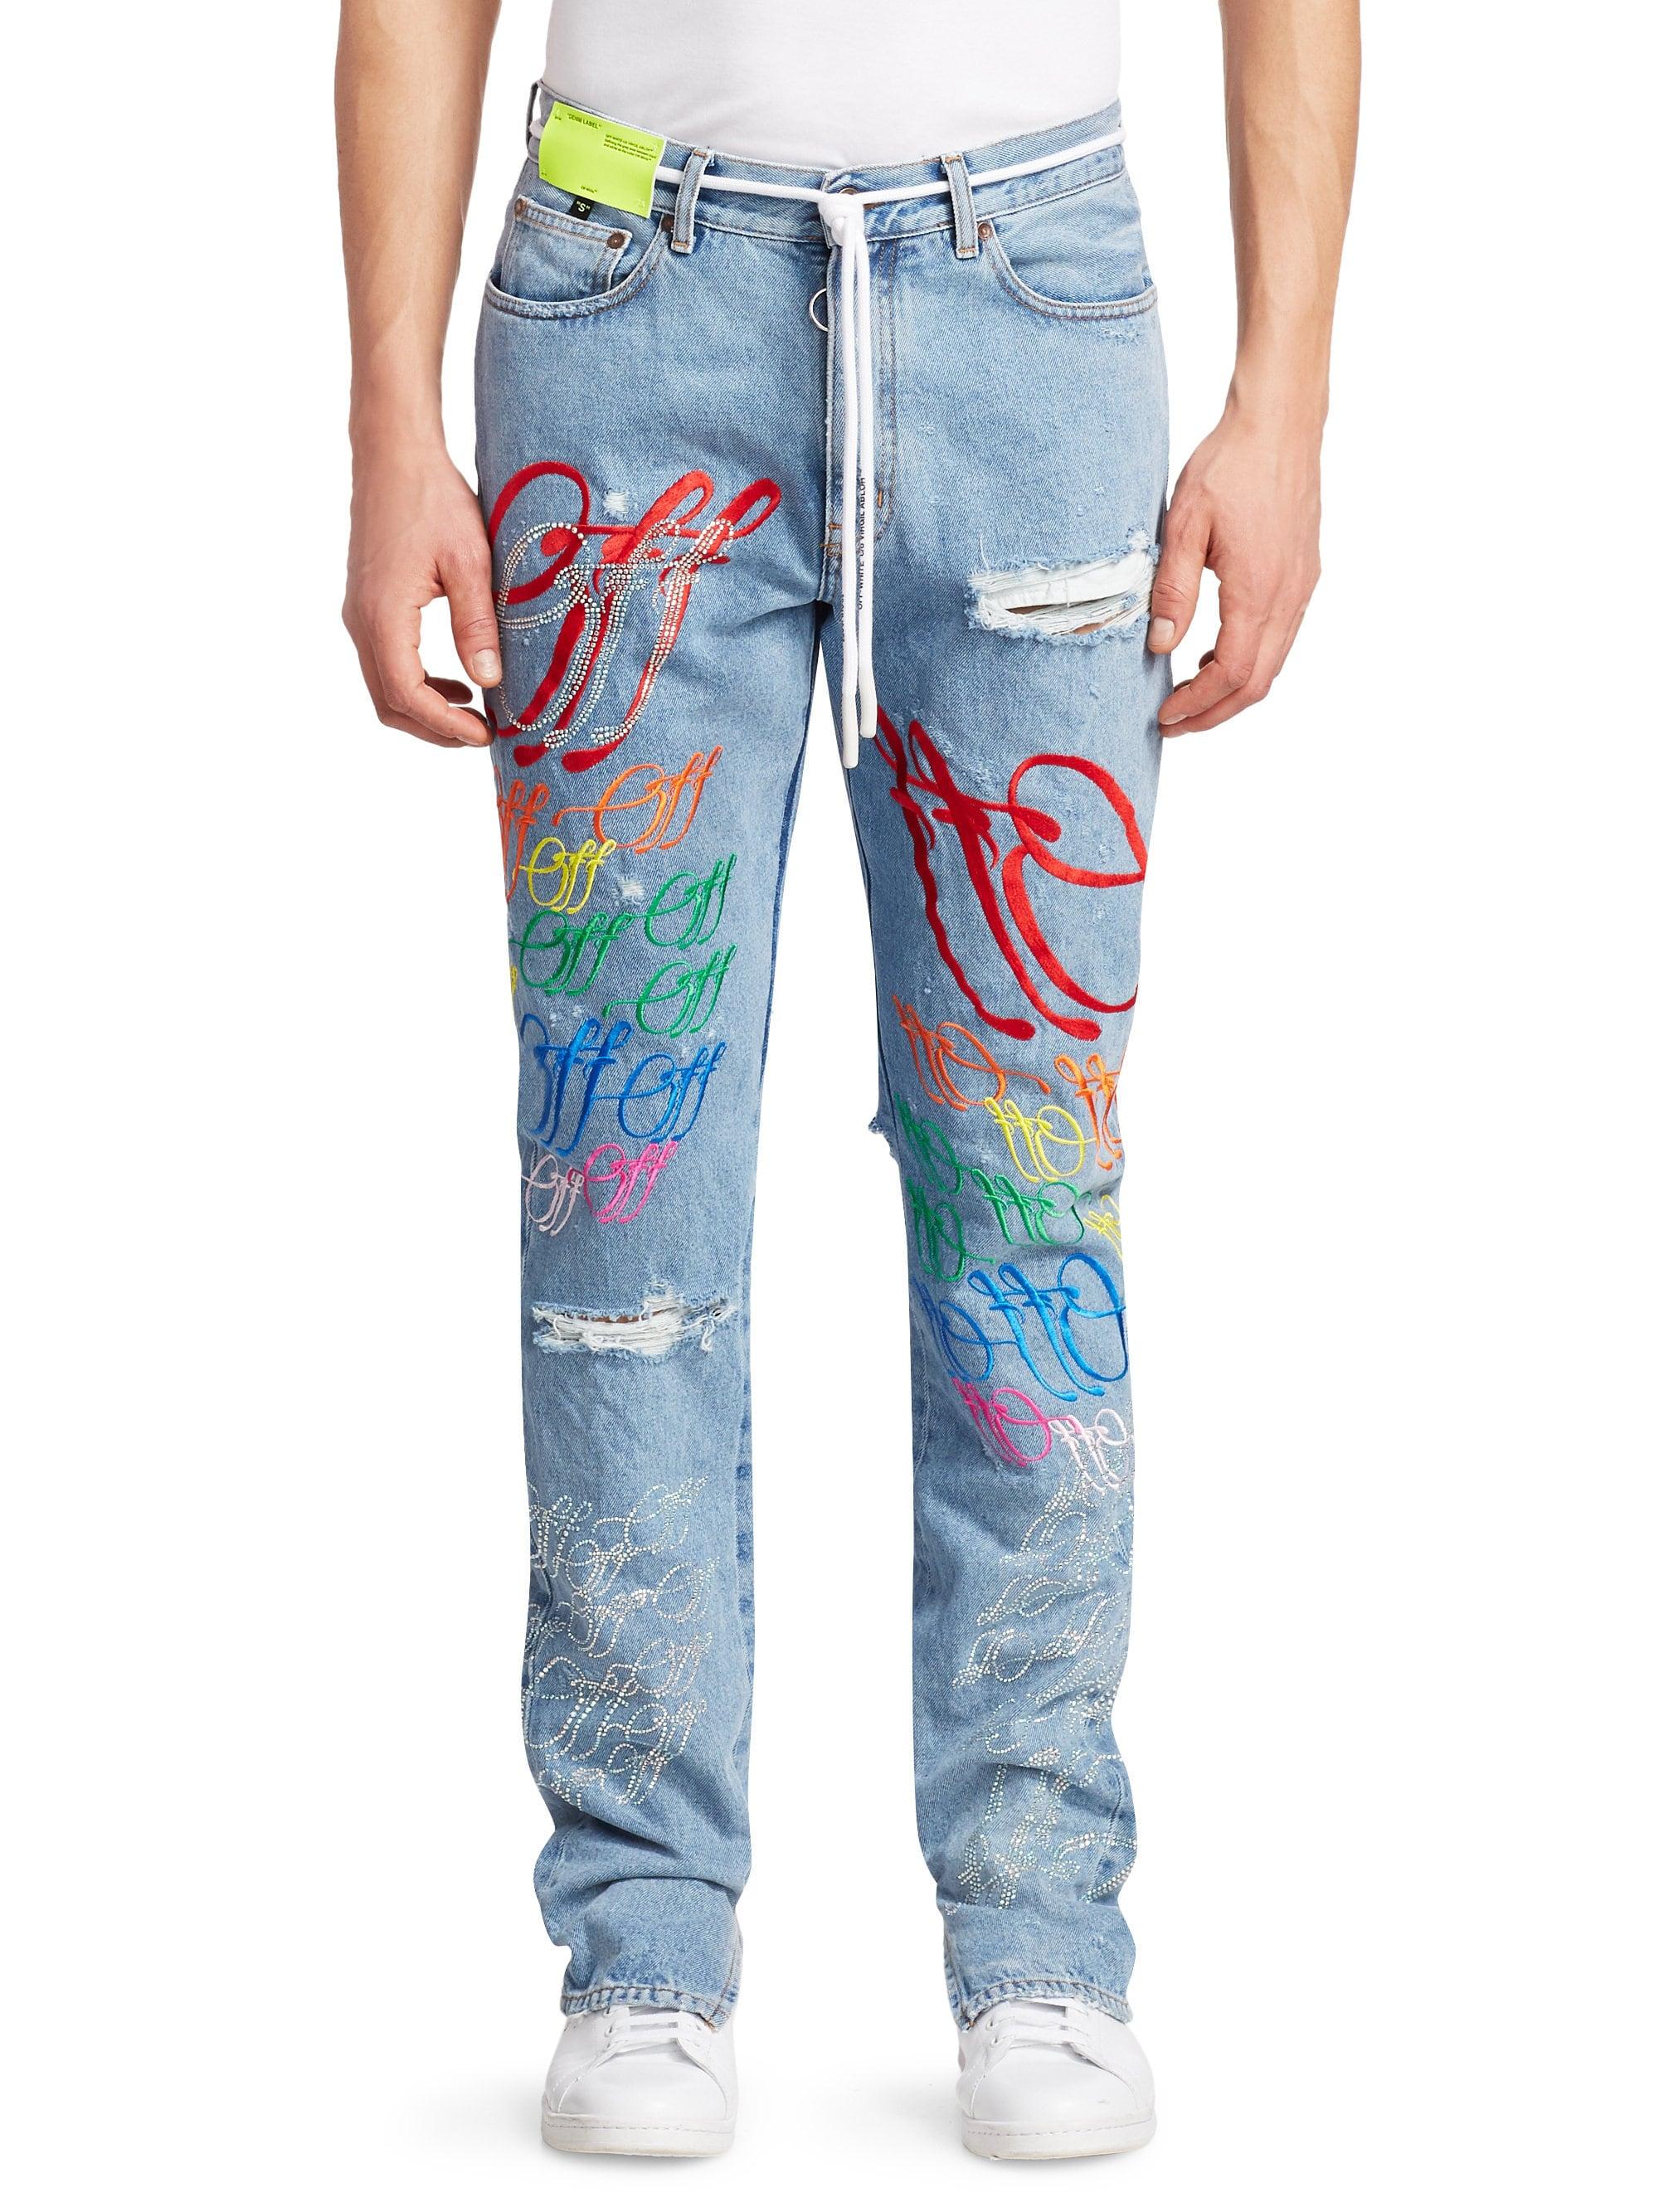 Details 75+ off white pants jeans - in.eteachers